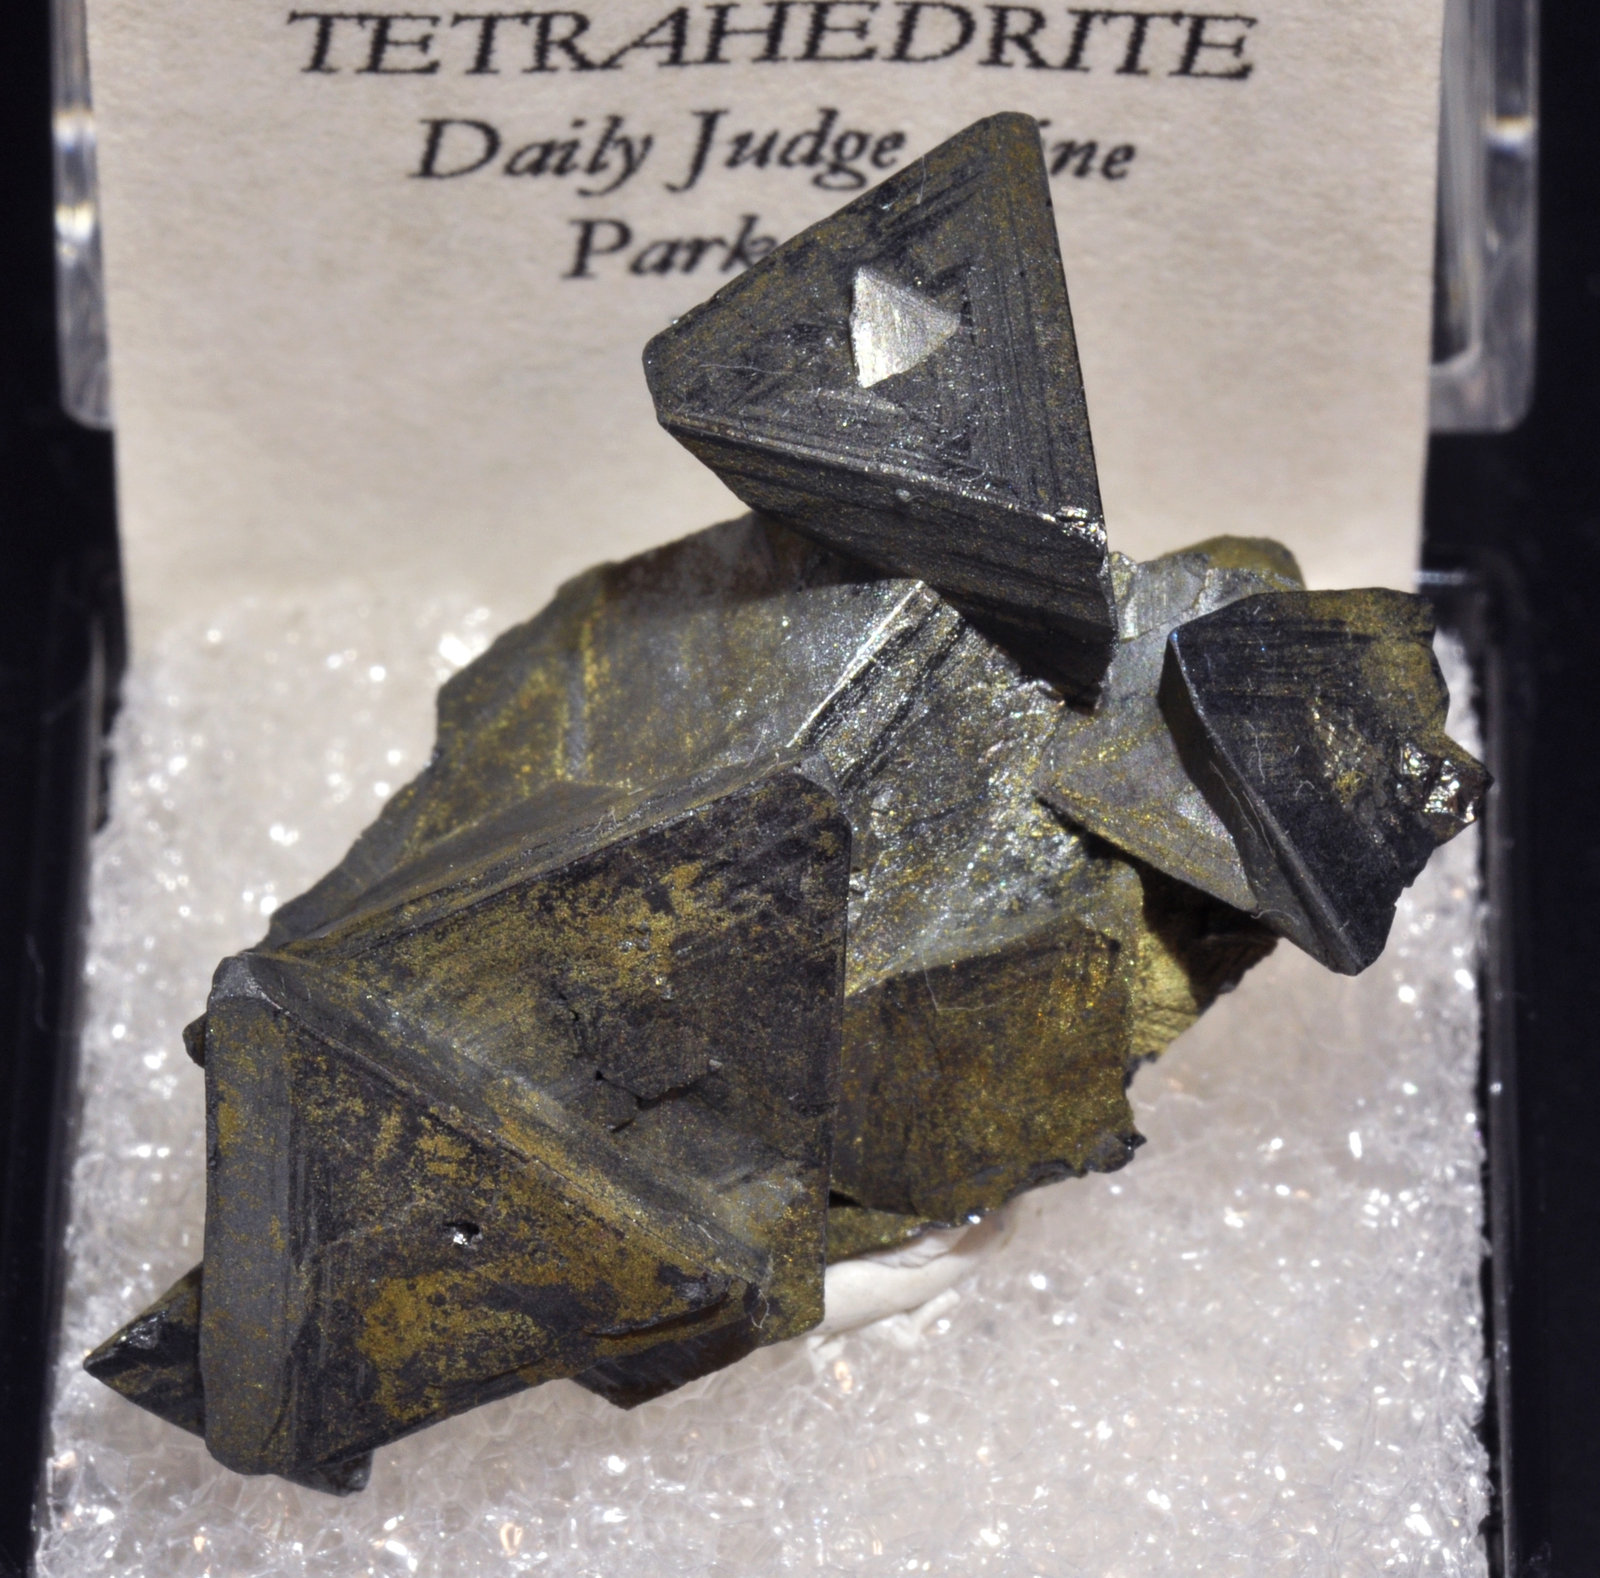 specimens/s_imagesAL4/Tetrahedrite-TF27AL4f2.jpg